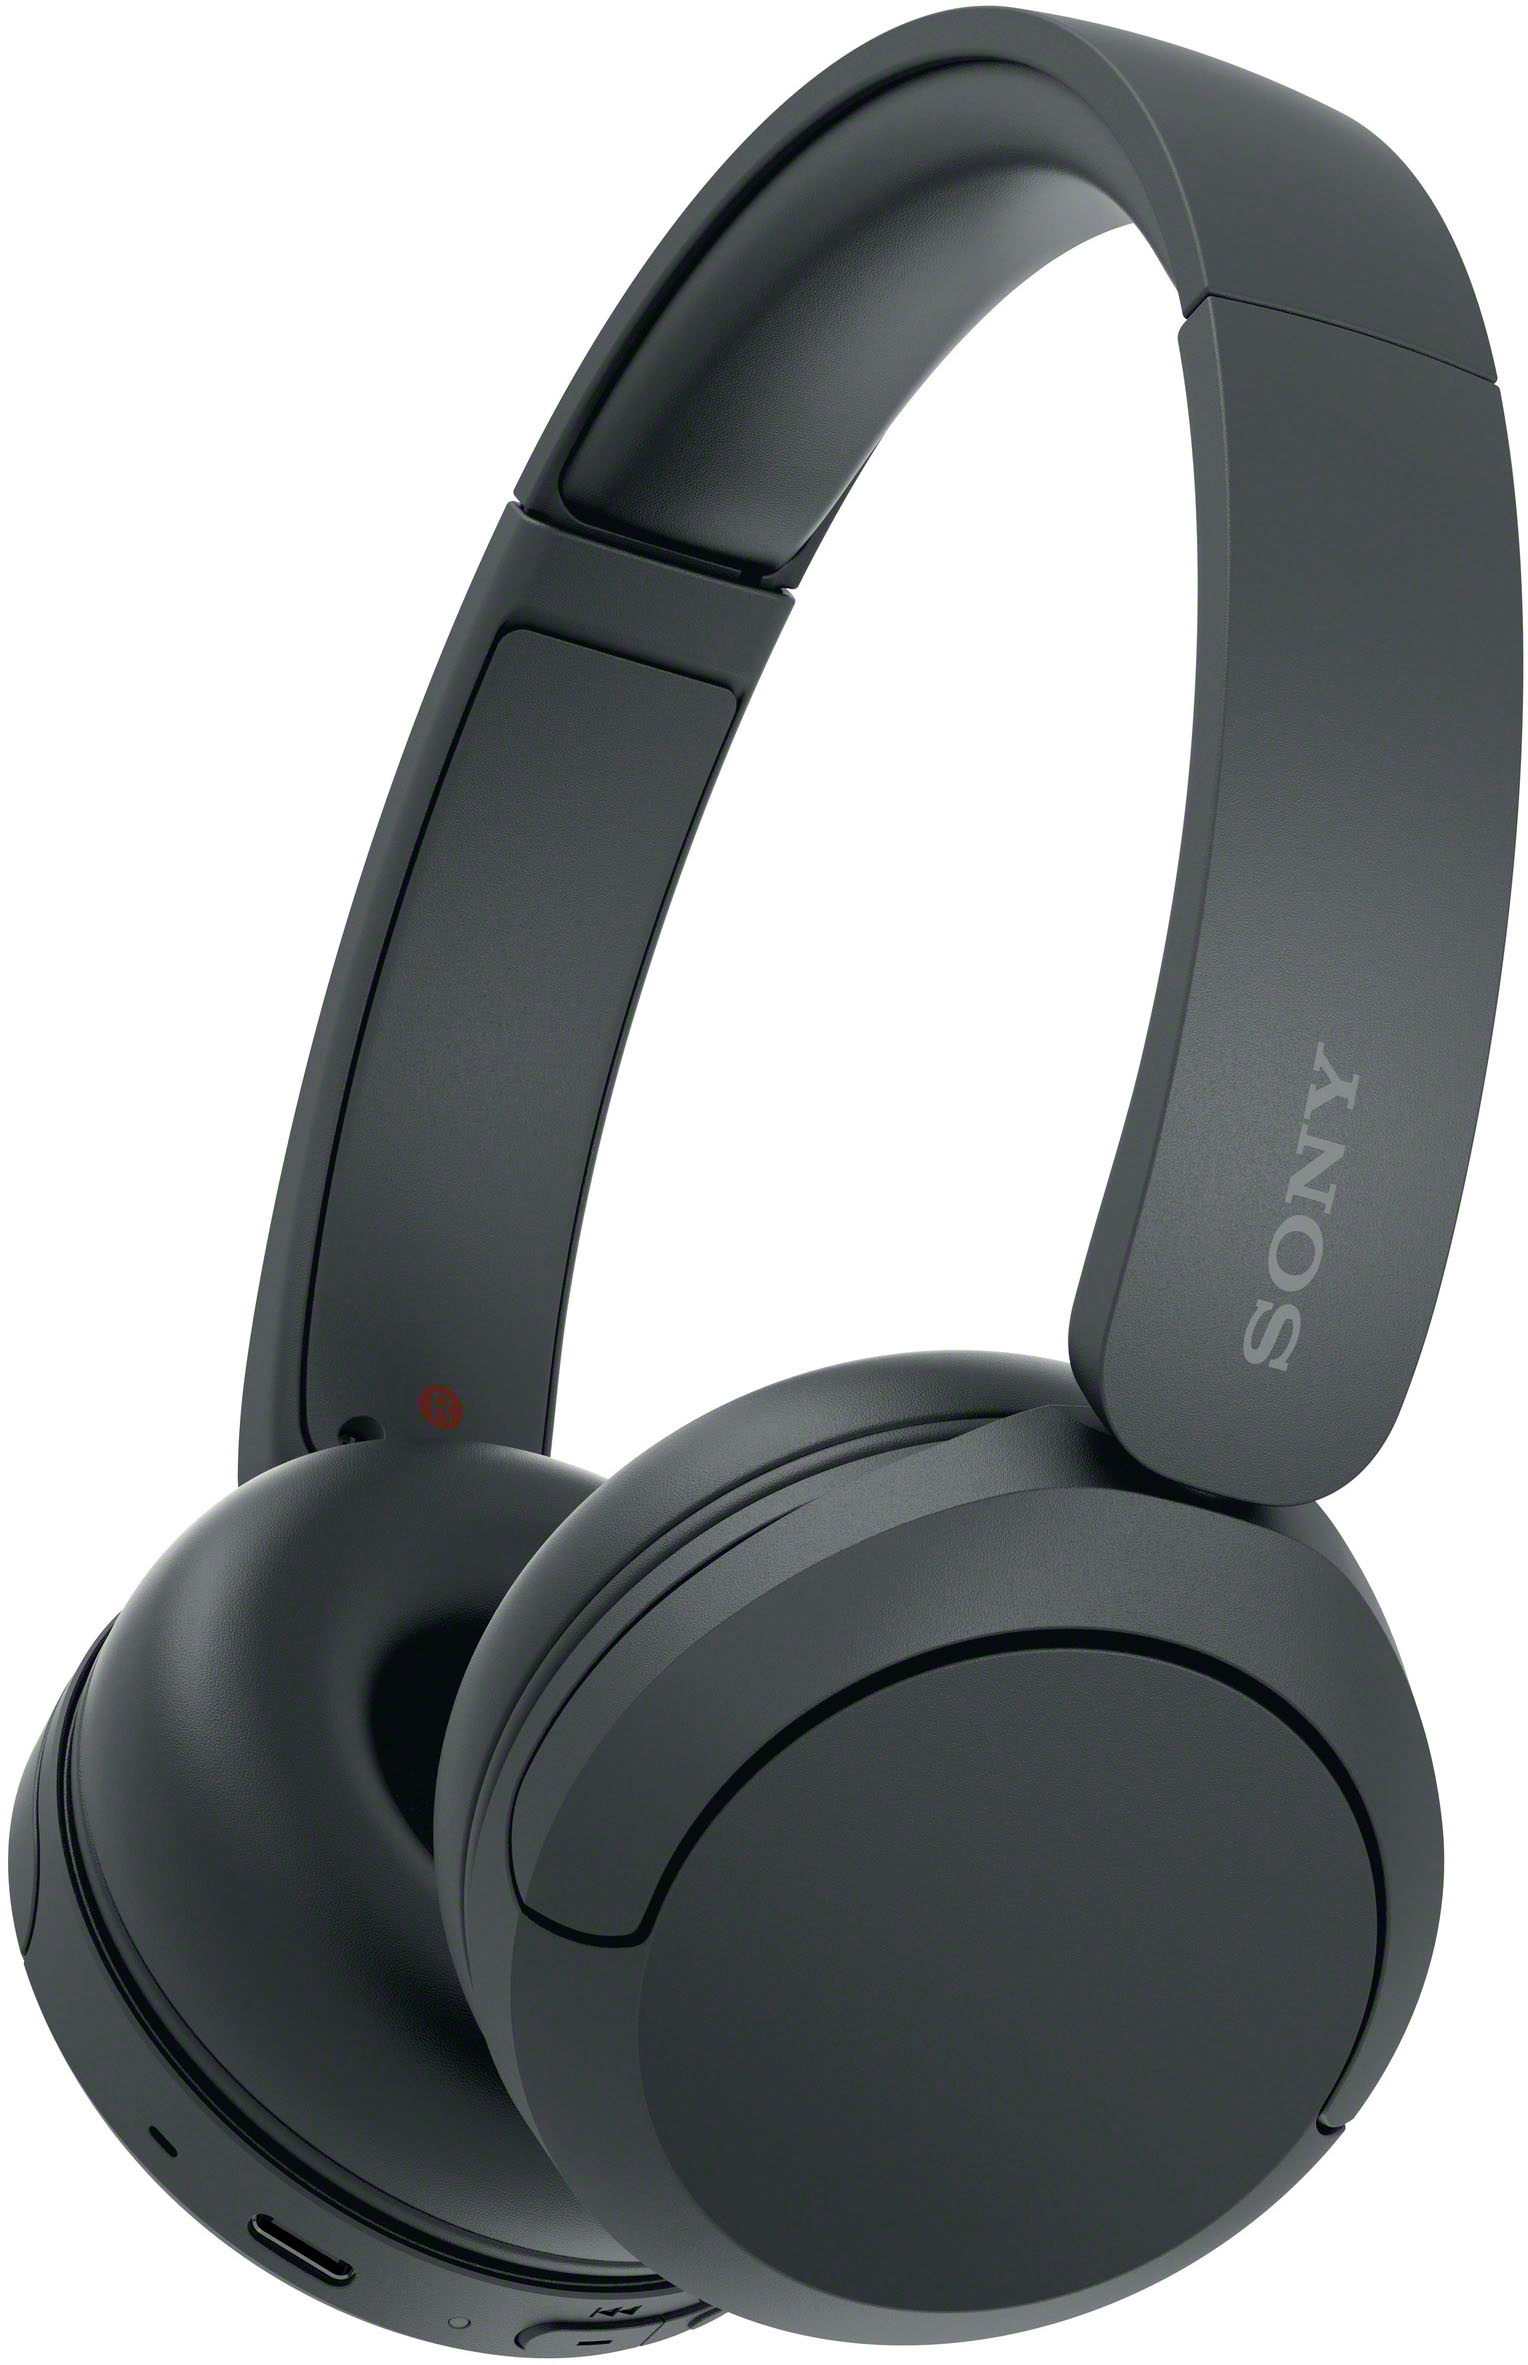 Sony Wireless Headphone with Microphone Black - Best Buy